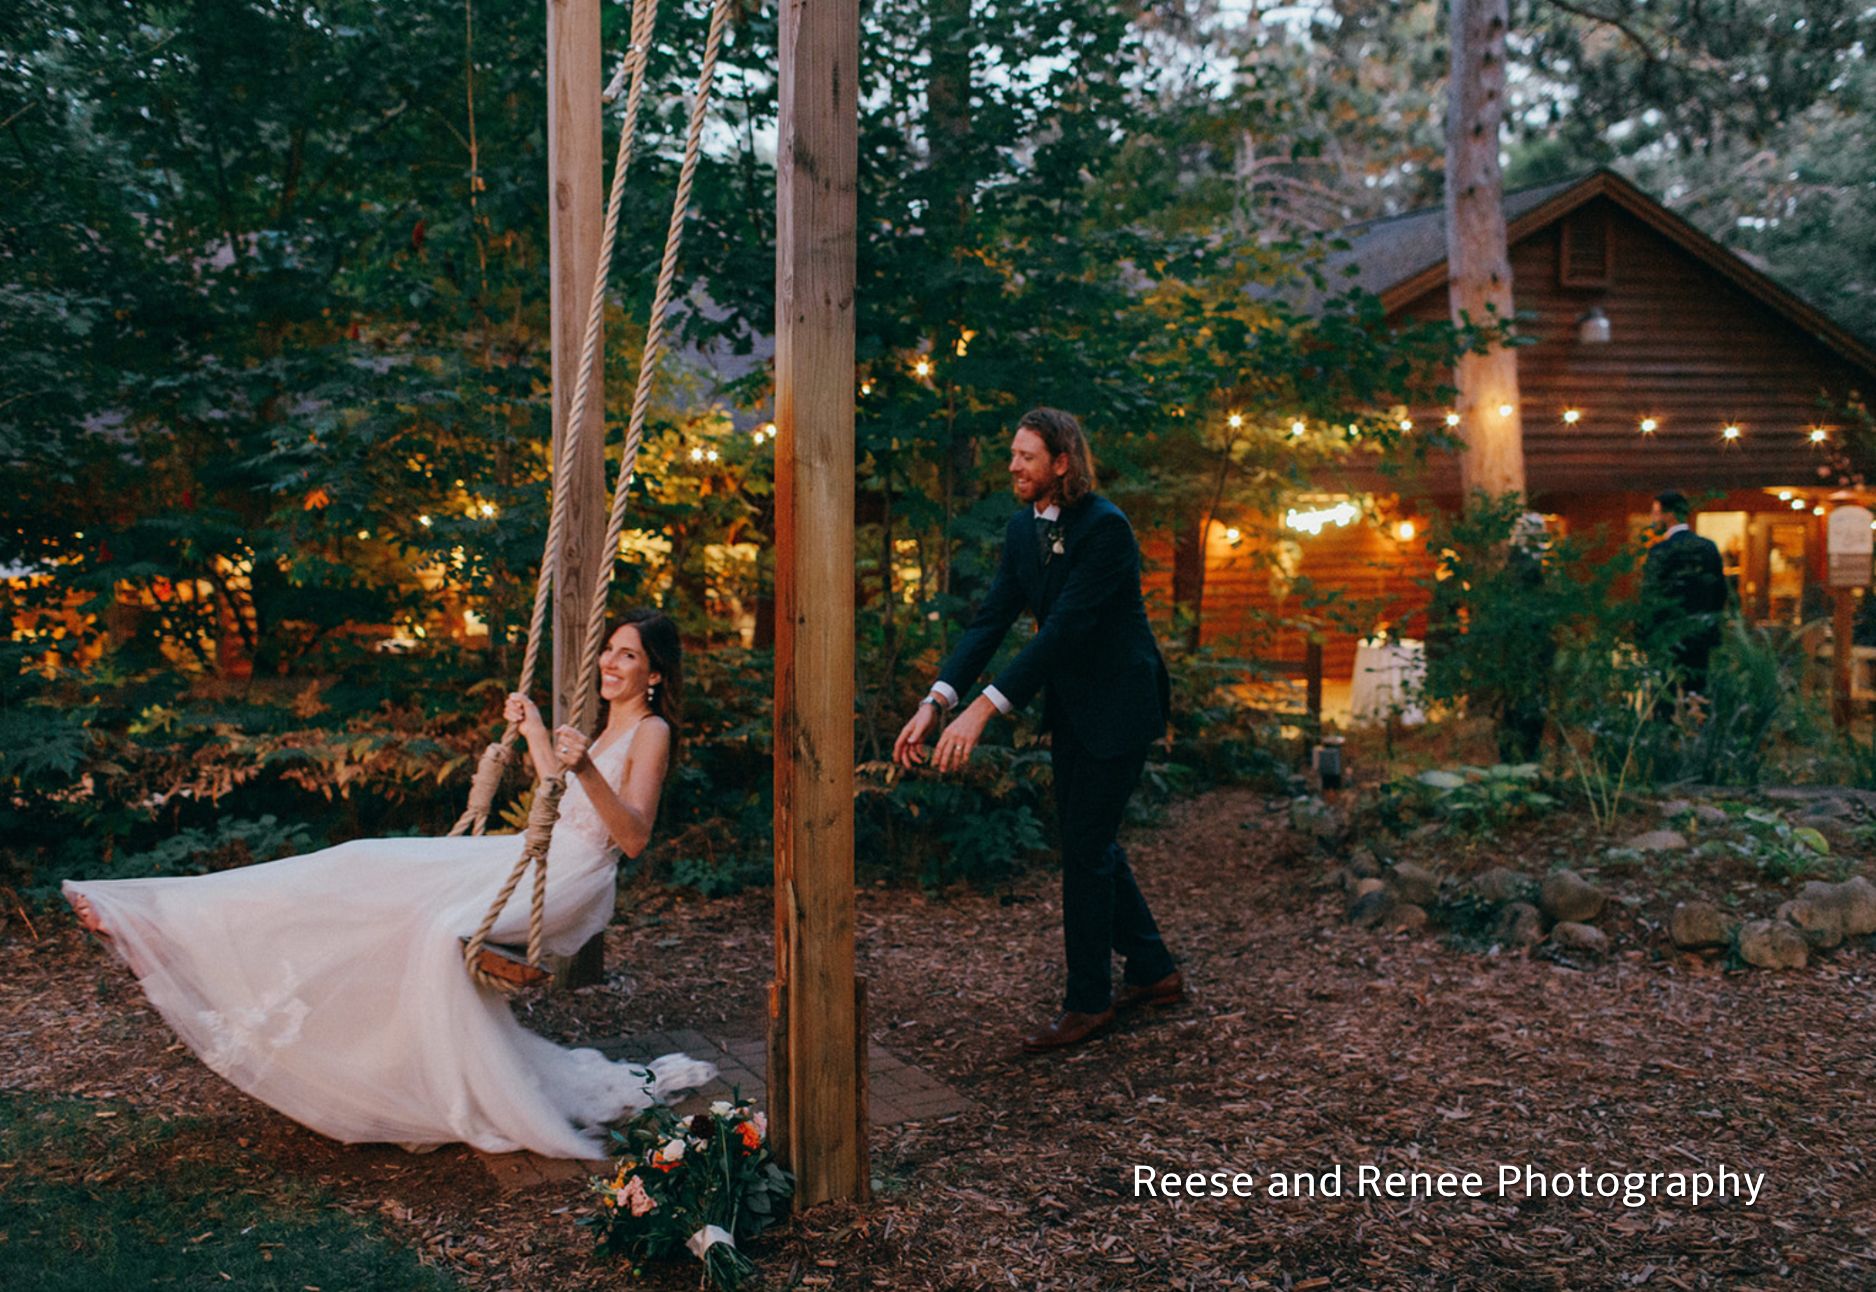 BlueBridge | Blue Chapel/Centre | Outdoor Wedding | Fall Wedding | Northern Michigan Wedding Venue | Bride and Groom